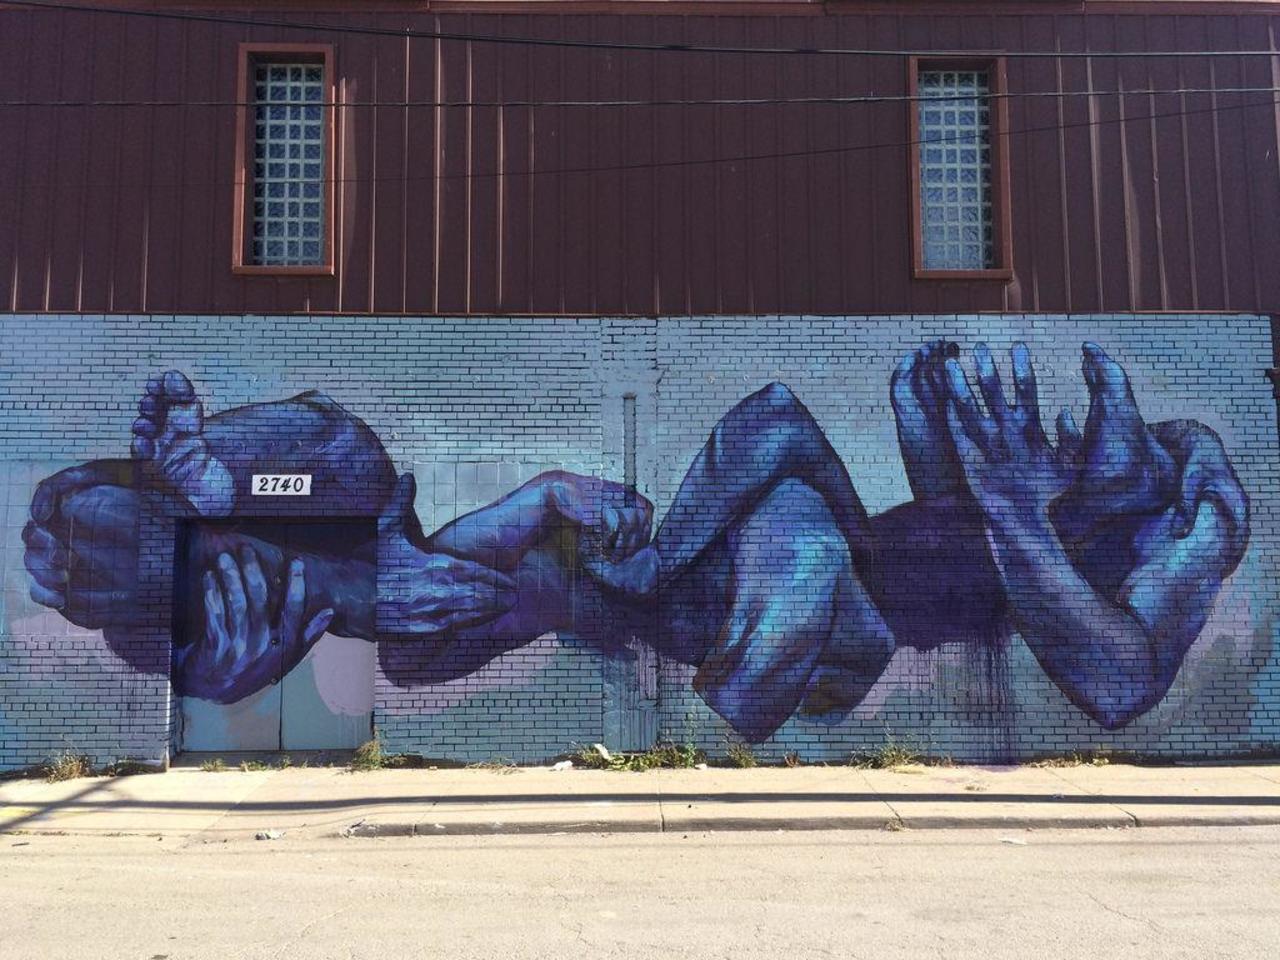 Taylor White for Murals in the Market in Detroit. #StreetArt #Graffiti #Mural https://t.co/oR2bUI1PFn